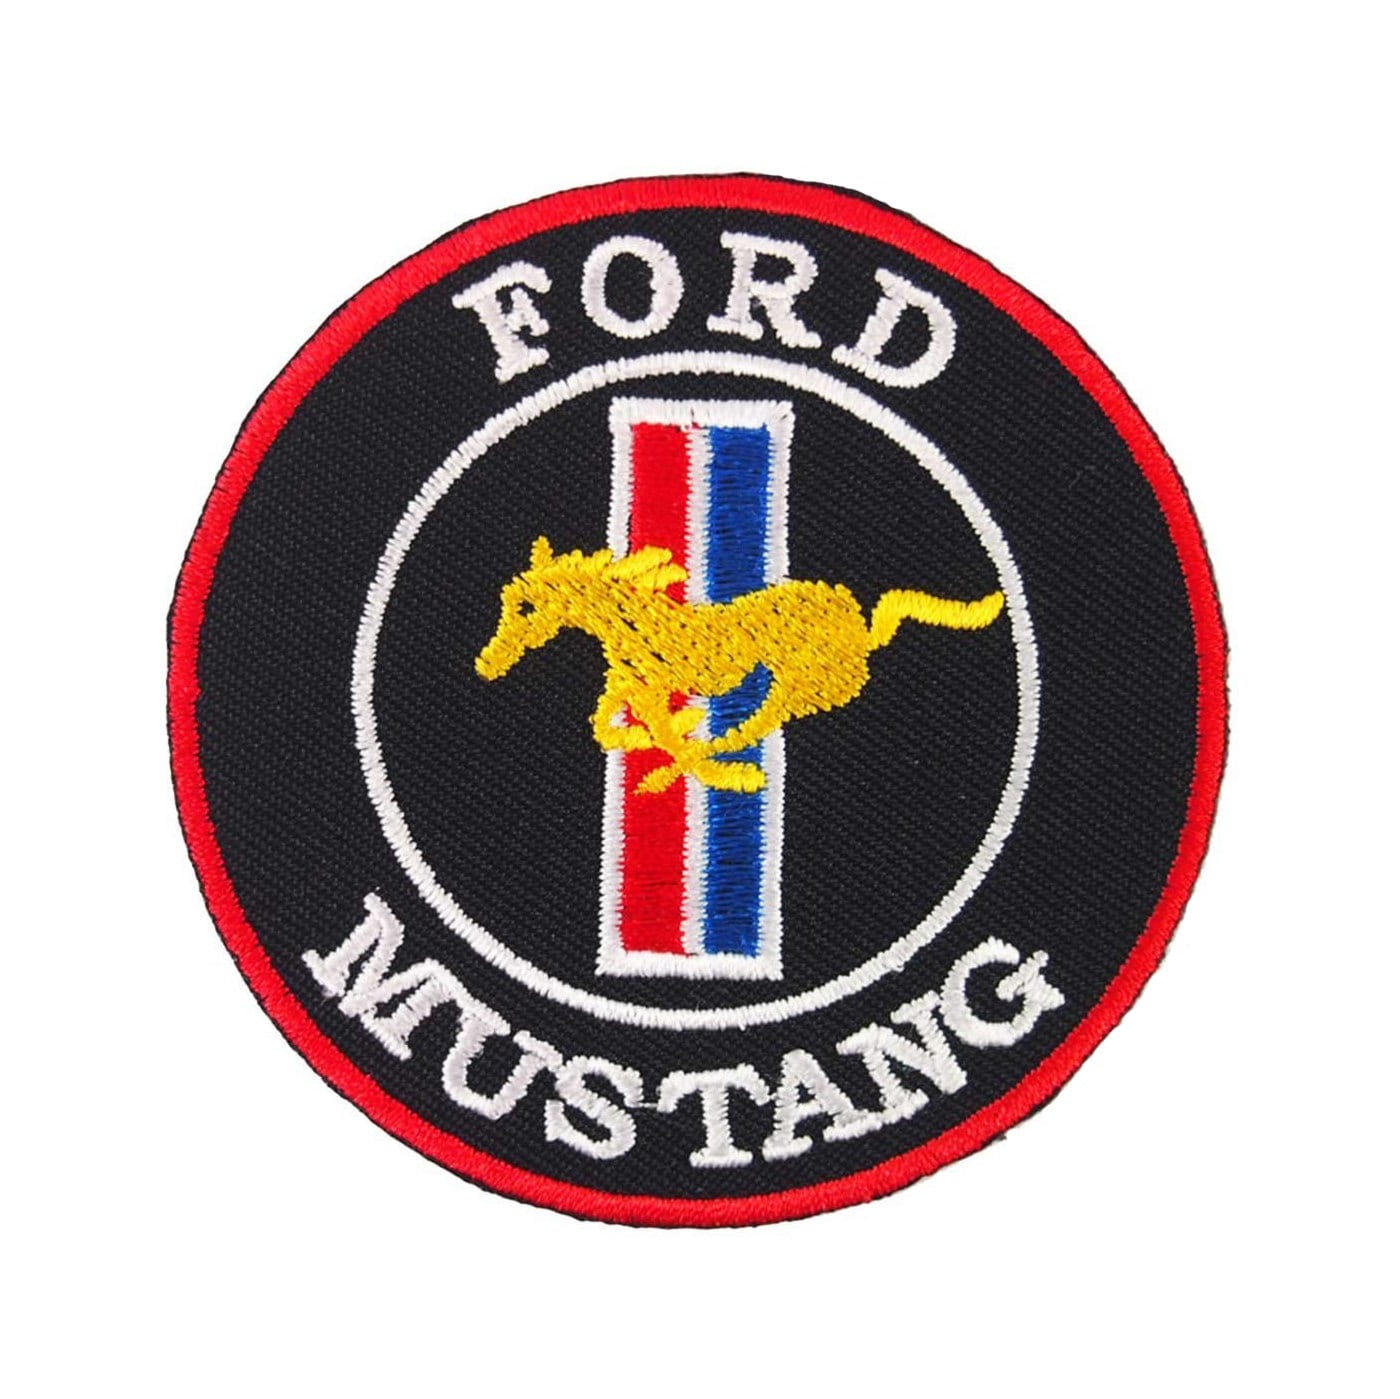 Ford racing clothing australia